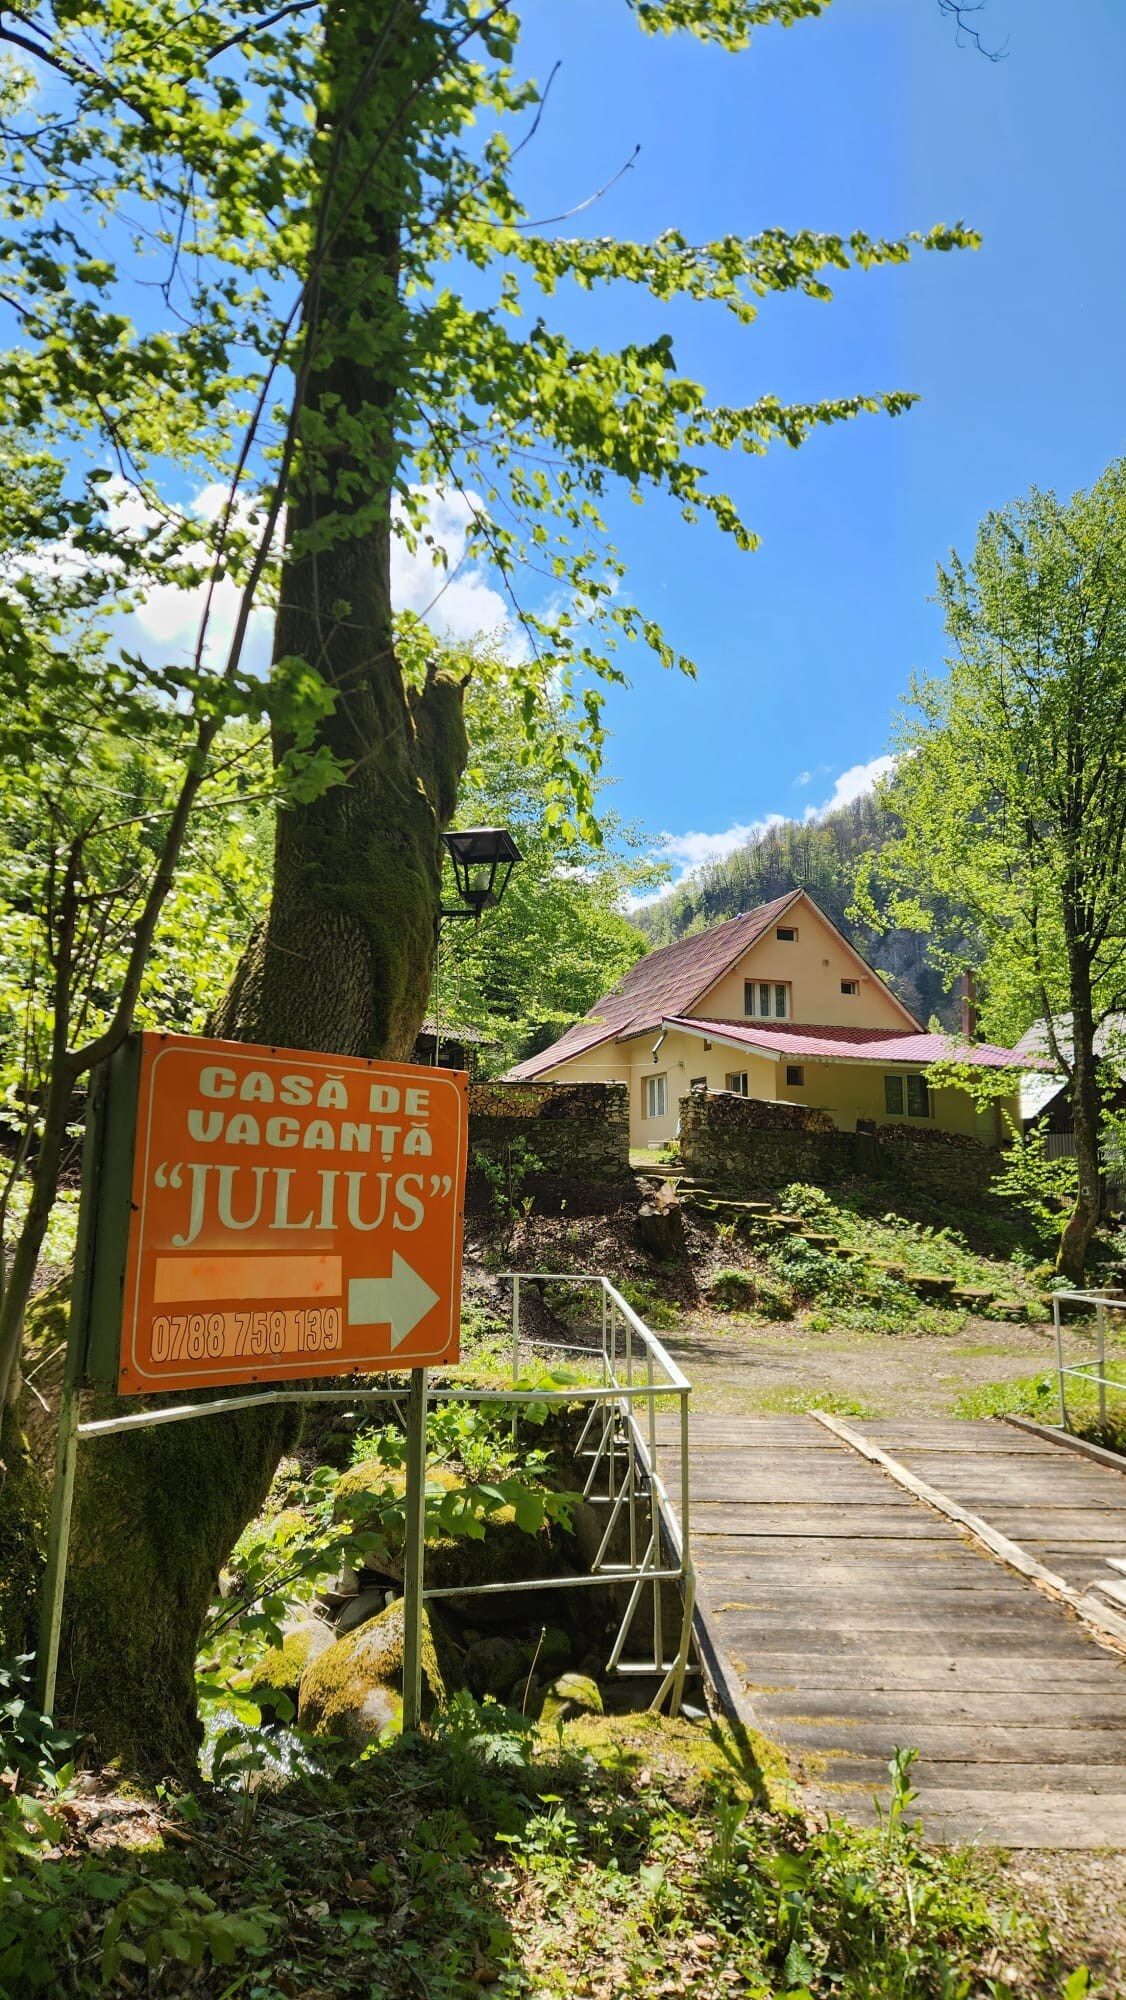 Casa de vacanta Julius